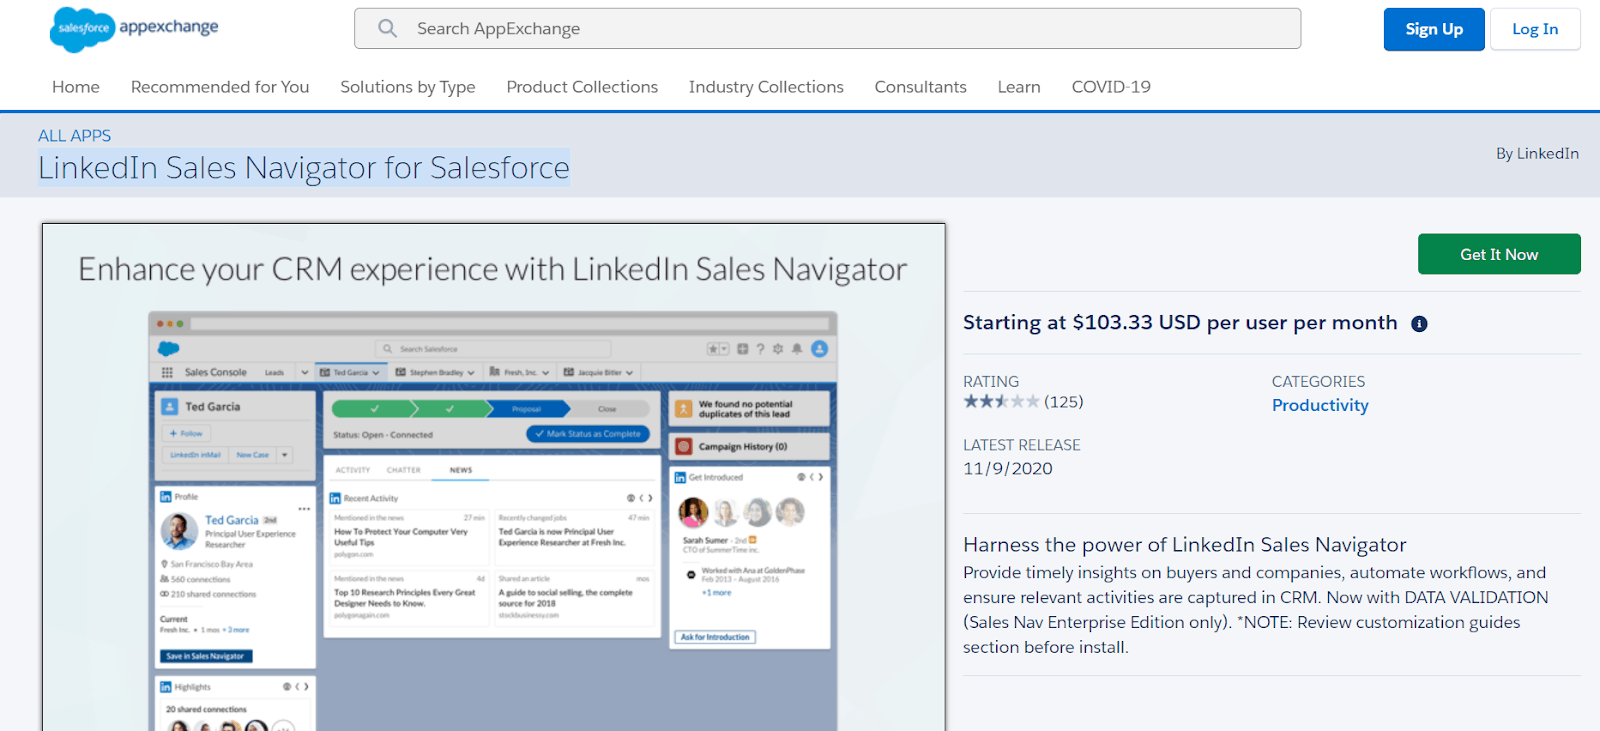 5. LinkedIn Sales Navigator Salesforce integration tool